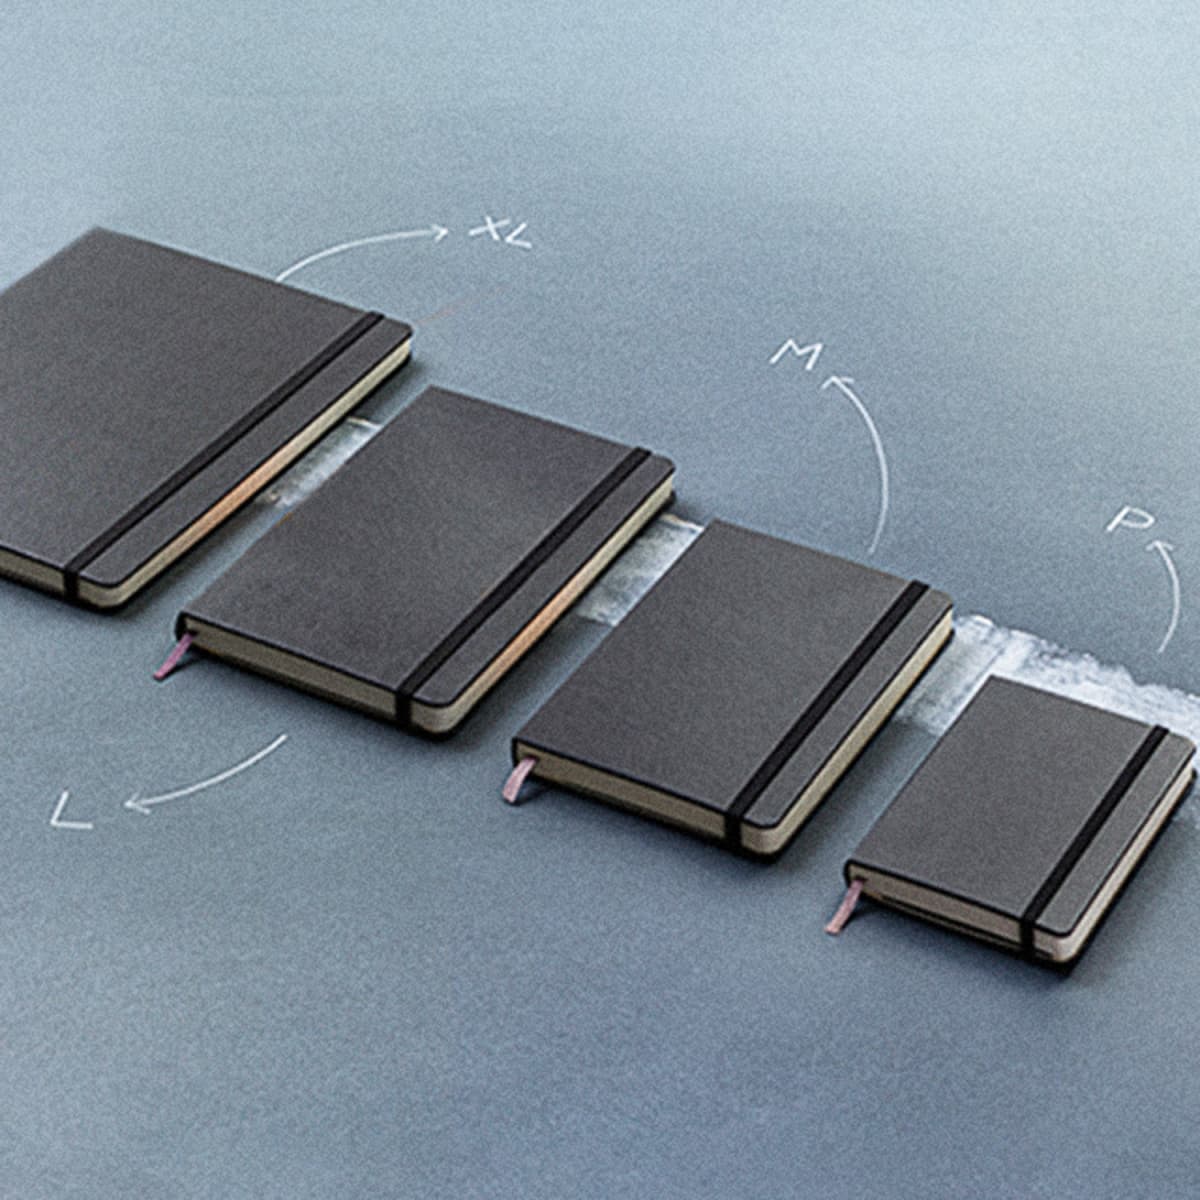 Moleskine Classic Hard Cover Notebook - Pocket